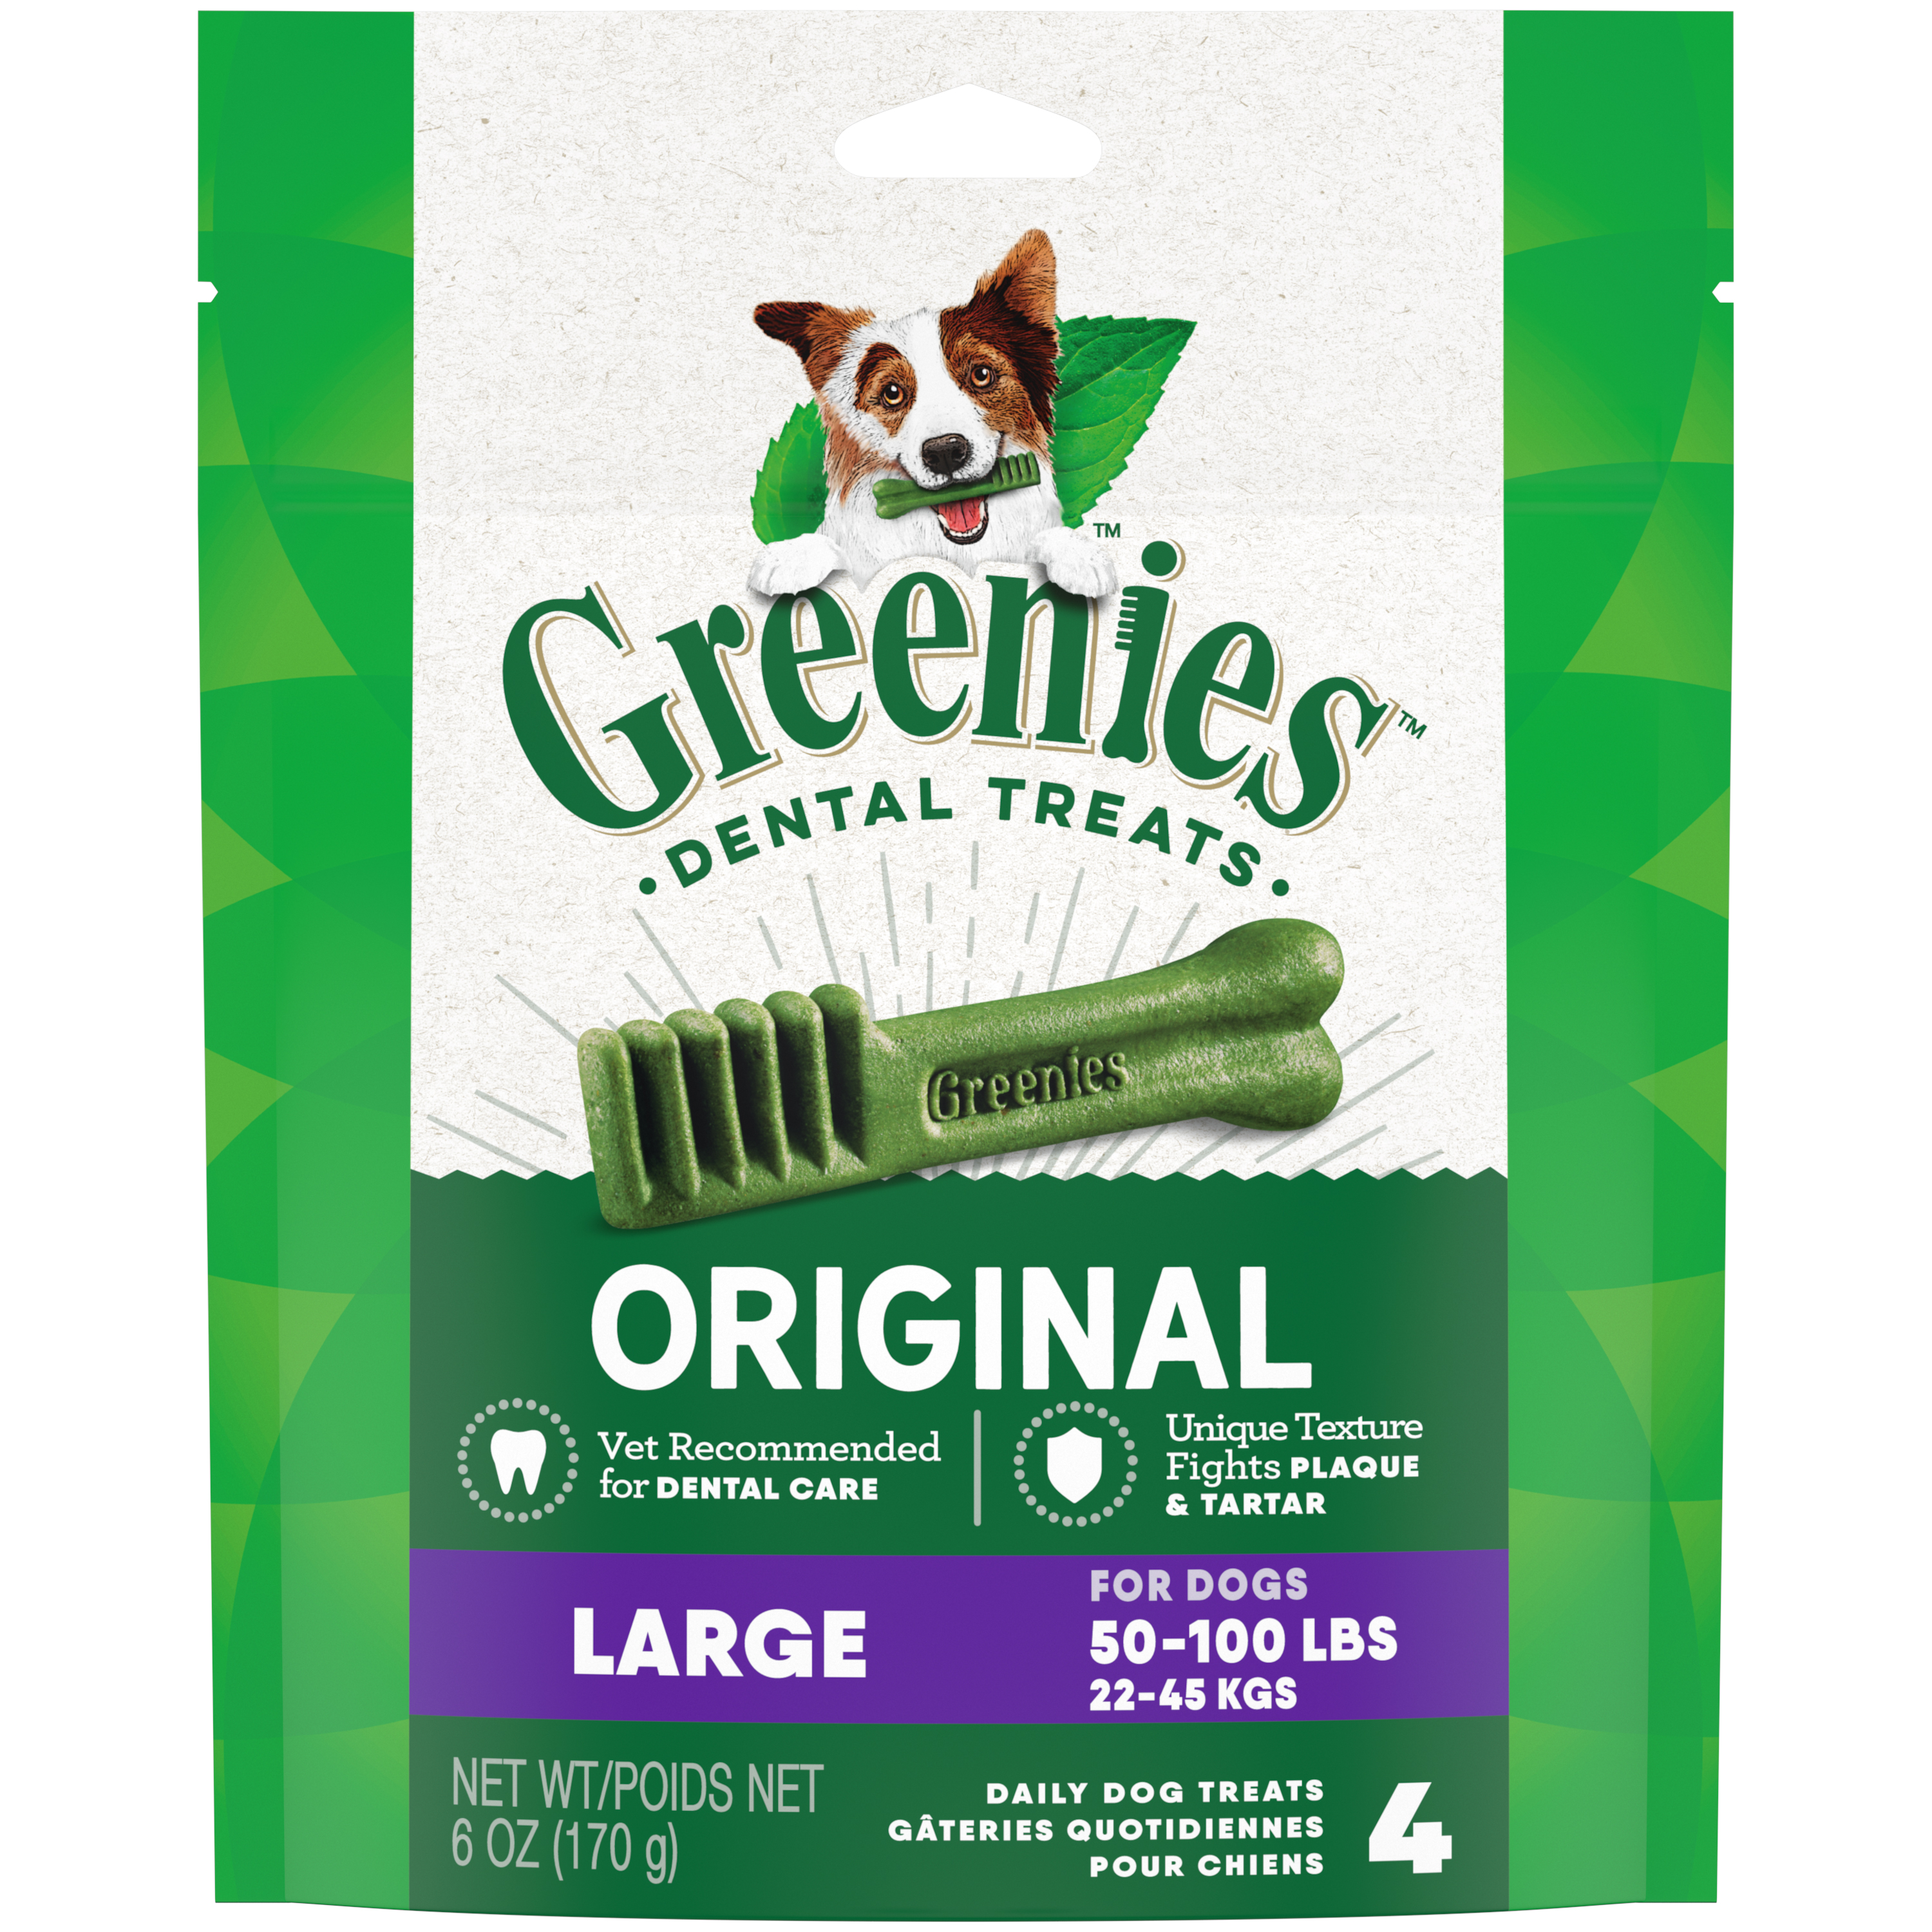 6 oz. Greenies Large Mini Treat Pack (4 Count) - Health/First Aid